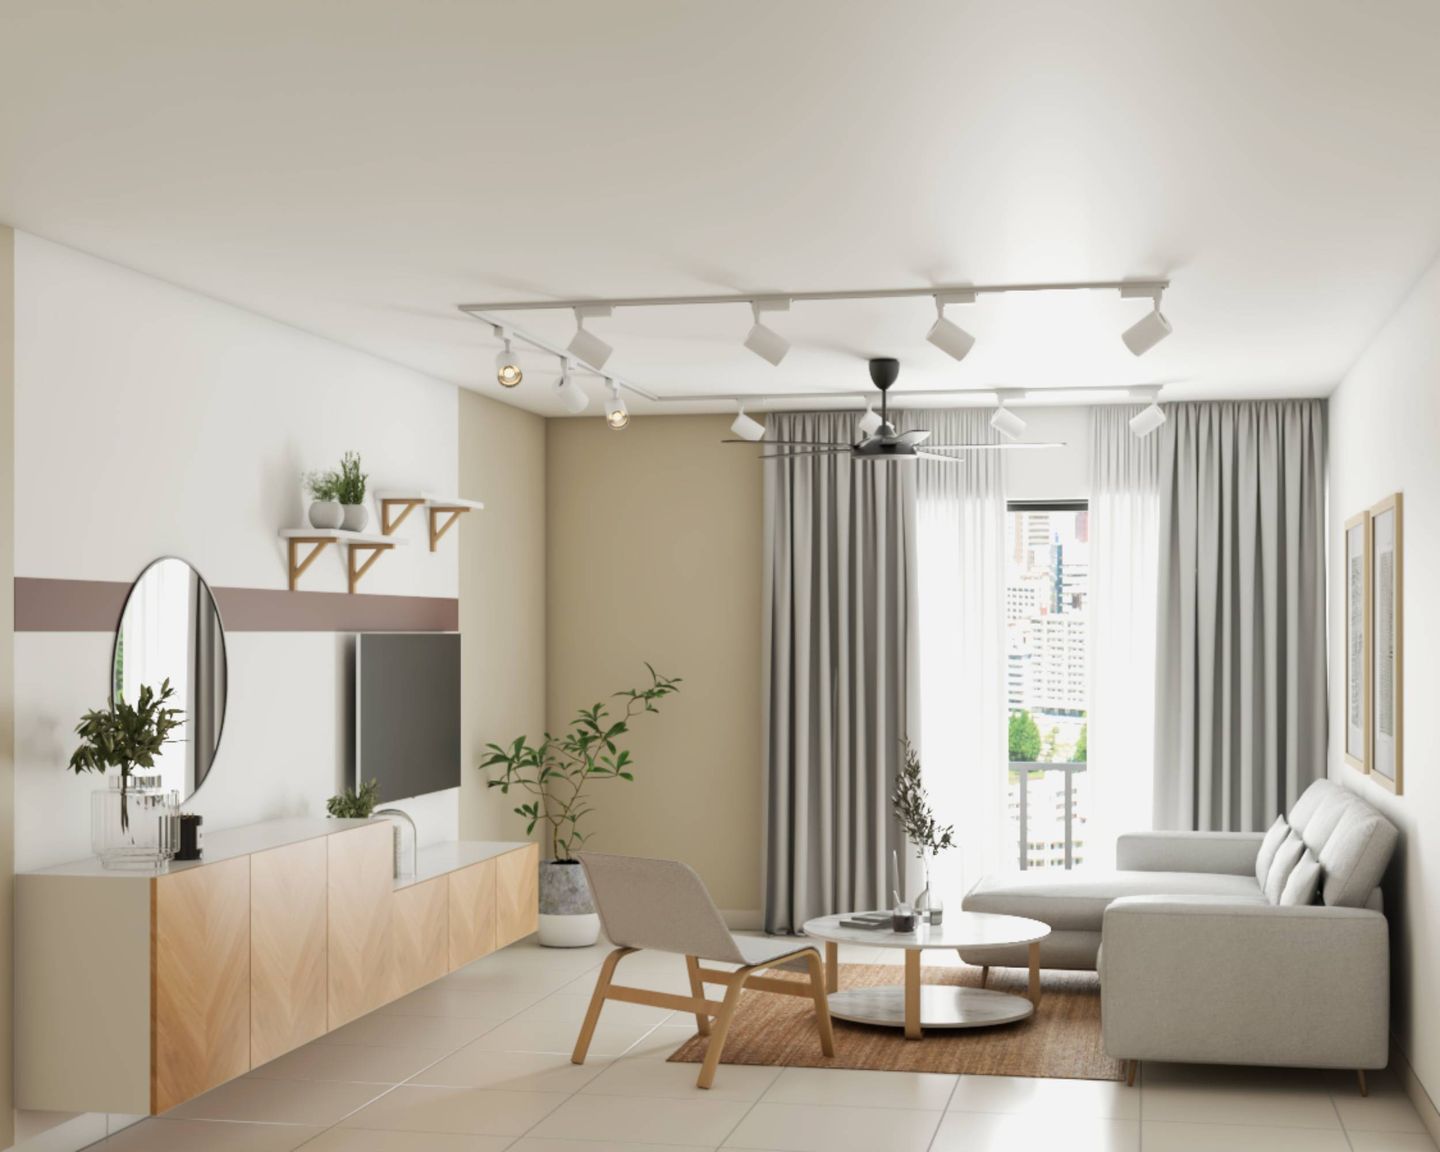 Contemporary Interior Design With A Grey Sofa And A Wooden TV Unit - Livspace